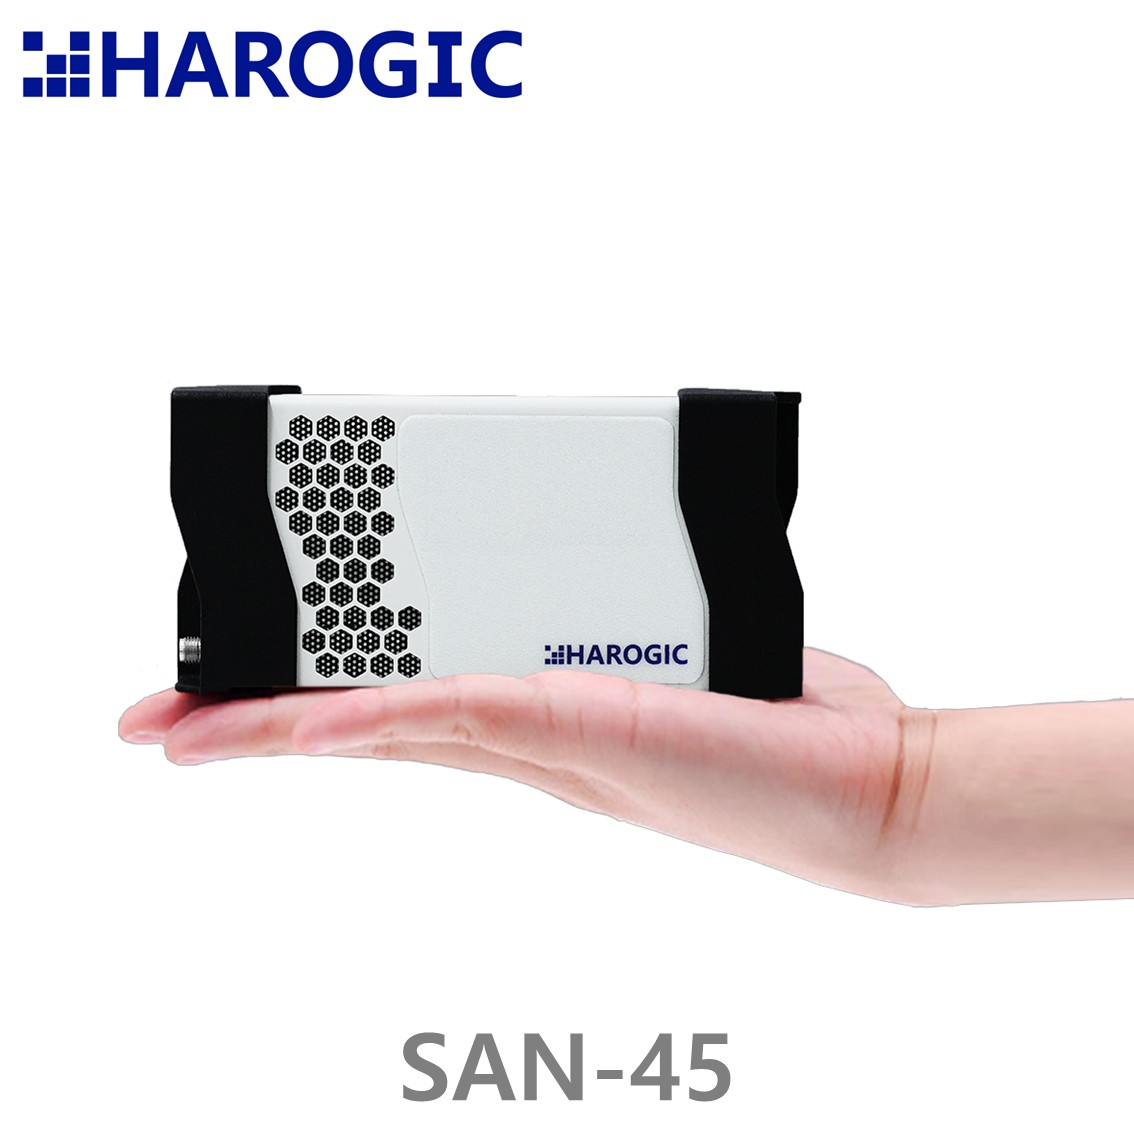 [ HAROGIC ] SAN-45, USB 초소형 리얼타임 스펙트럼분석기 9 kHz - 4.5 GHz, 6.25MHz 대역폭, 100GHz/s sweep, USB3.0